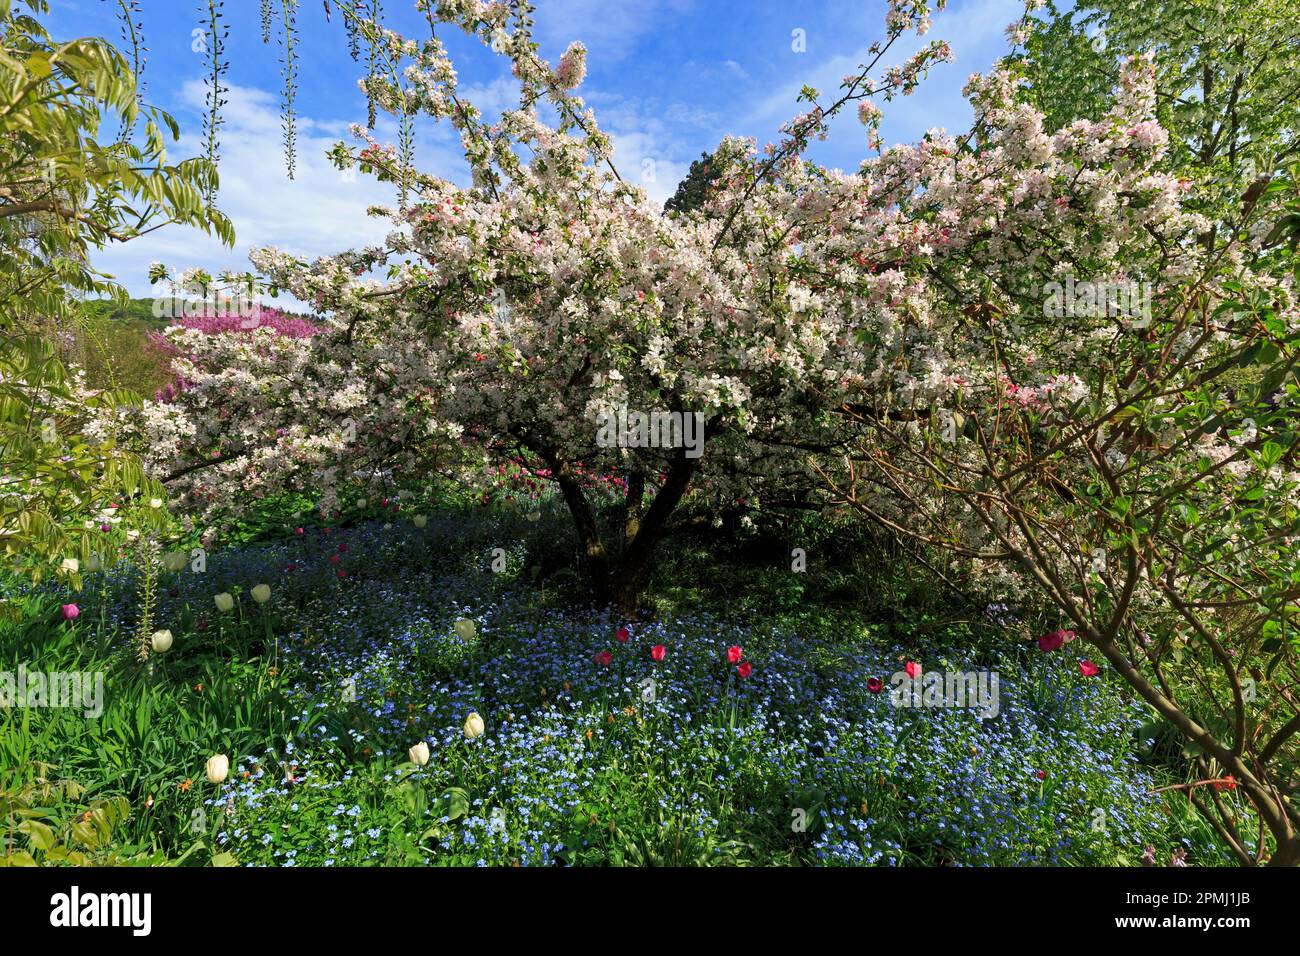 Germany, Baden-Wuerttemberg, Weinheim, Hermannshof, flowering, blossoming european crab apple (Malus sylvestris), wild apple tree Stock Photo